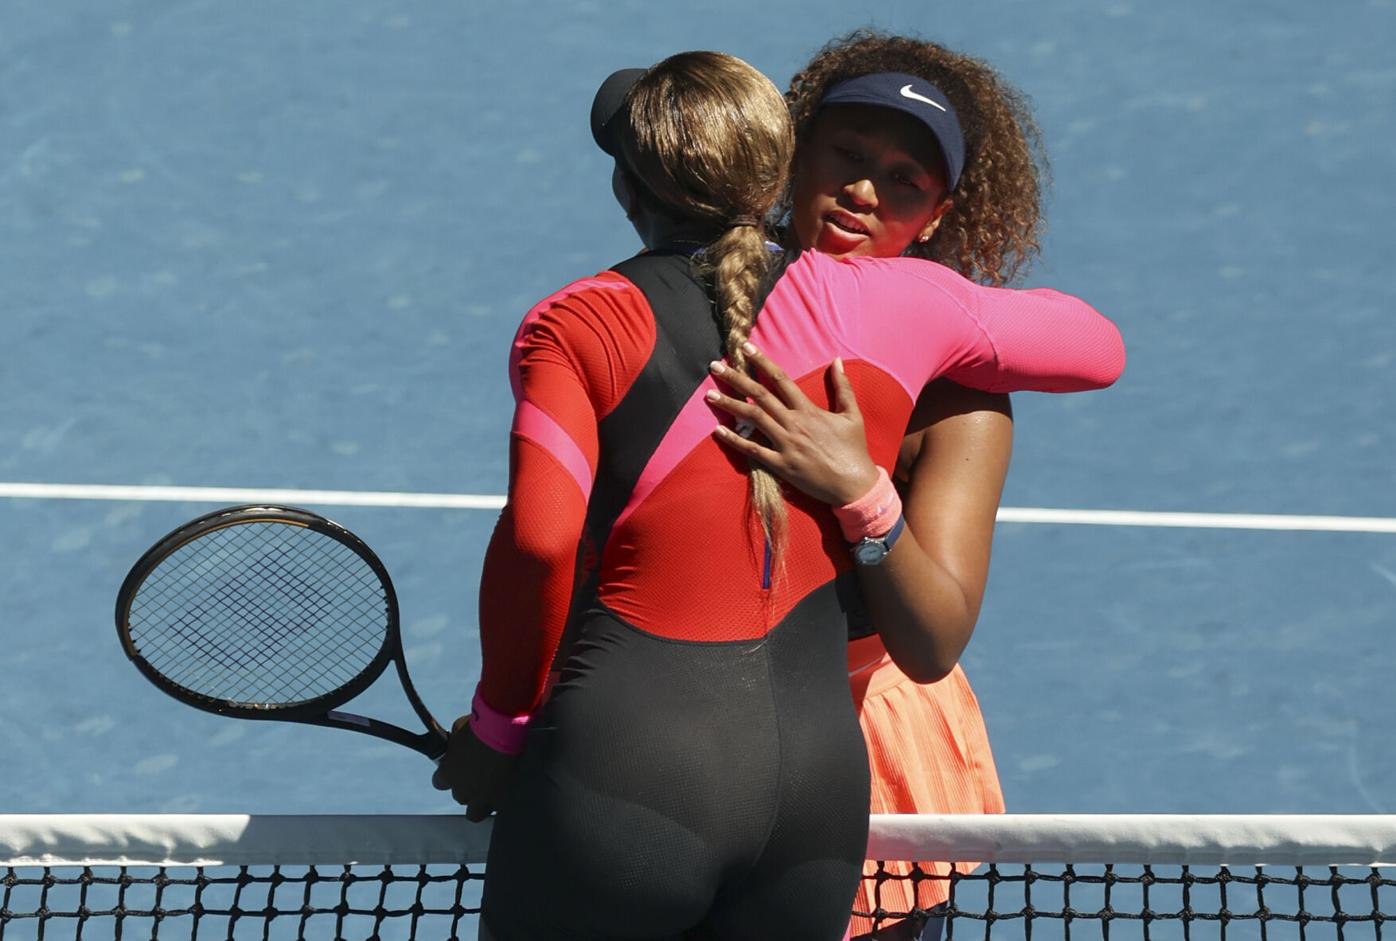 Serena stopped: Naomi Osaka beats Williams in Australian Open semifinals